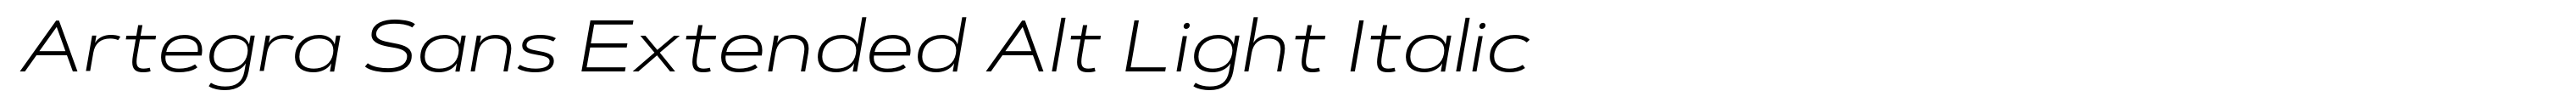 Artegra Sans Extended Alt Light Italic